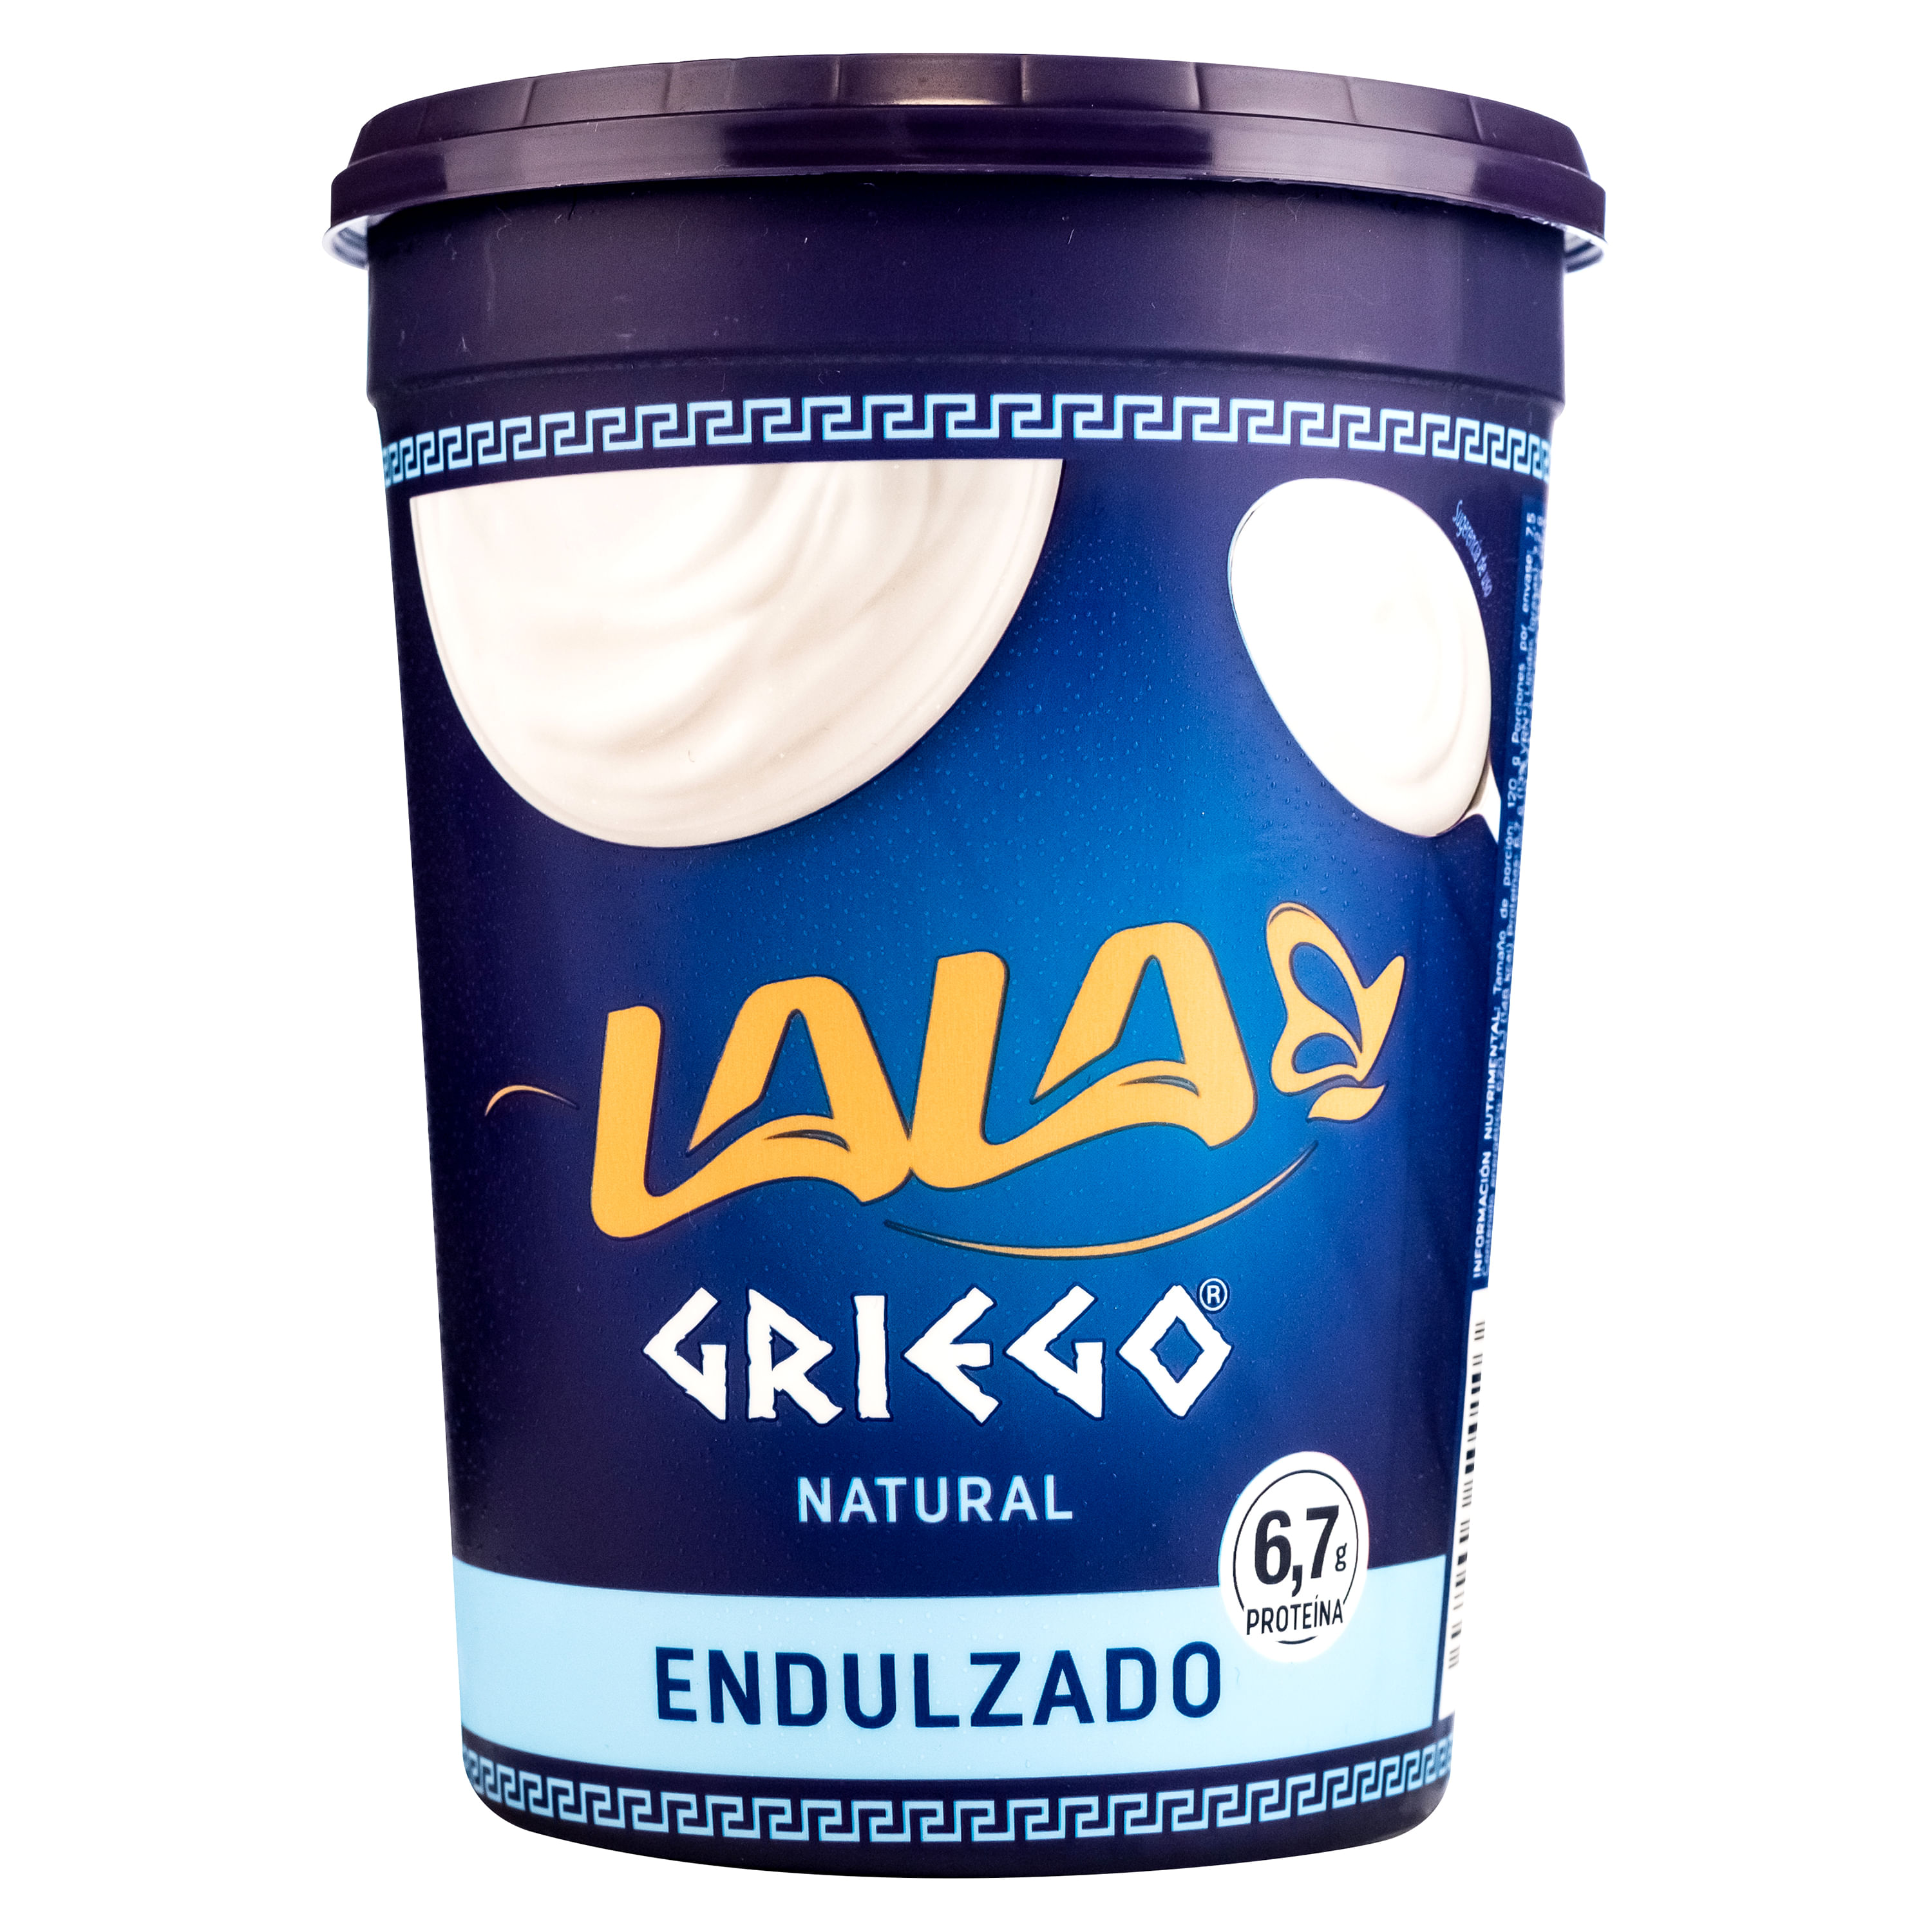 Yogurt-marca-Lala-Griego-Natural-900-g-1-25663